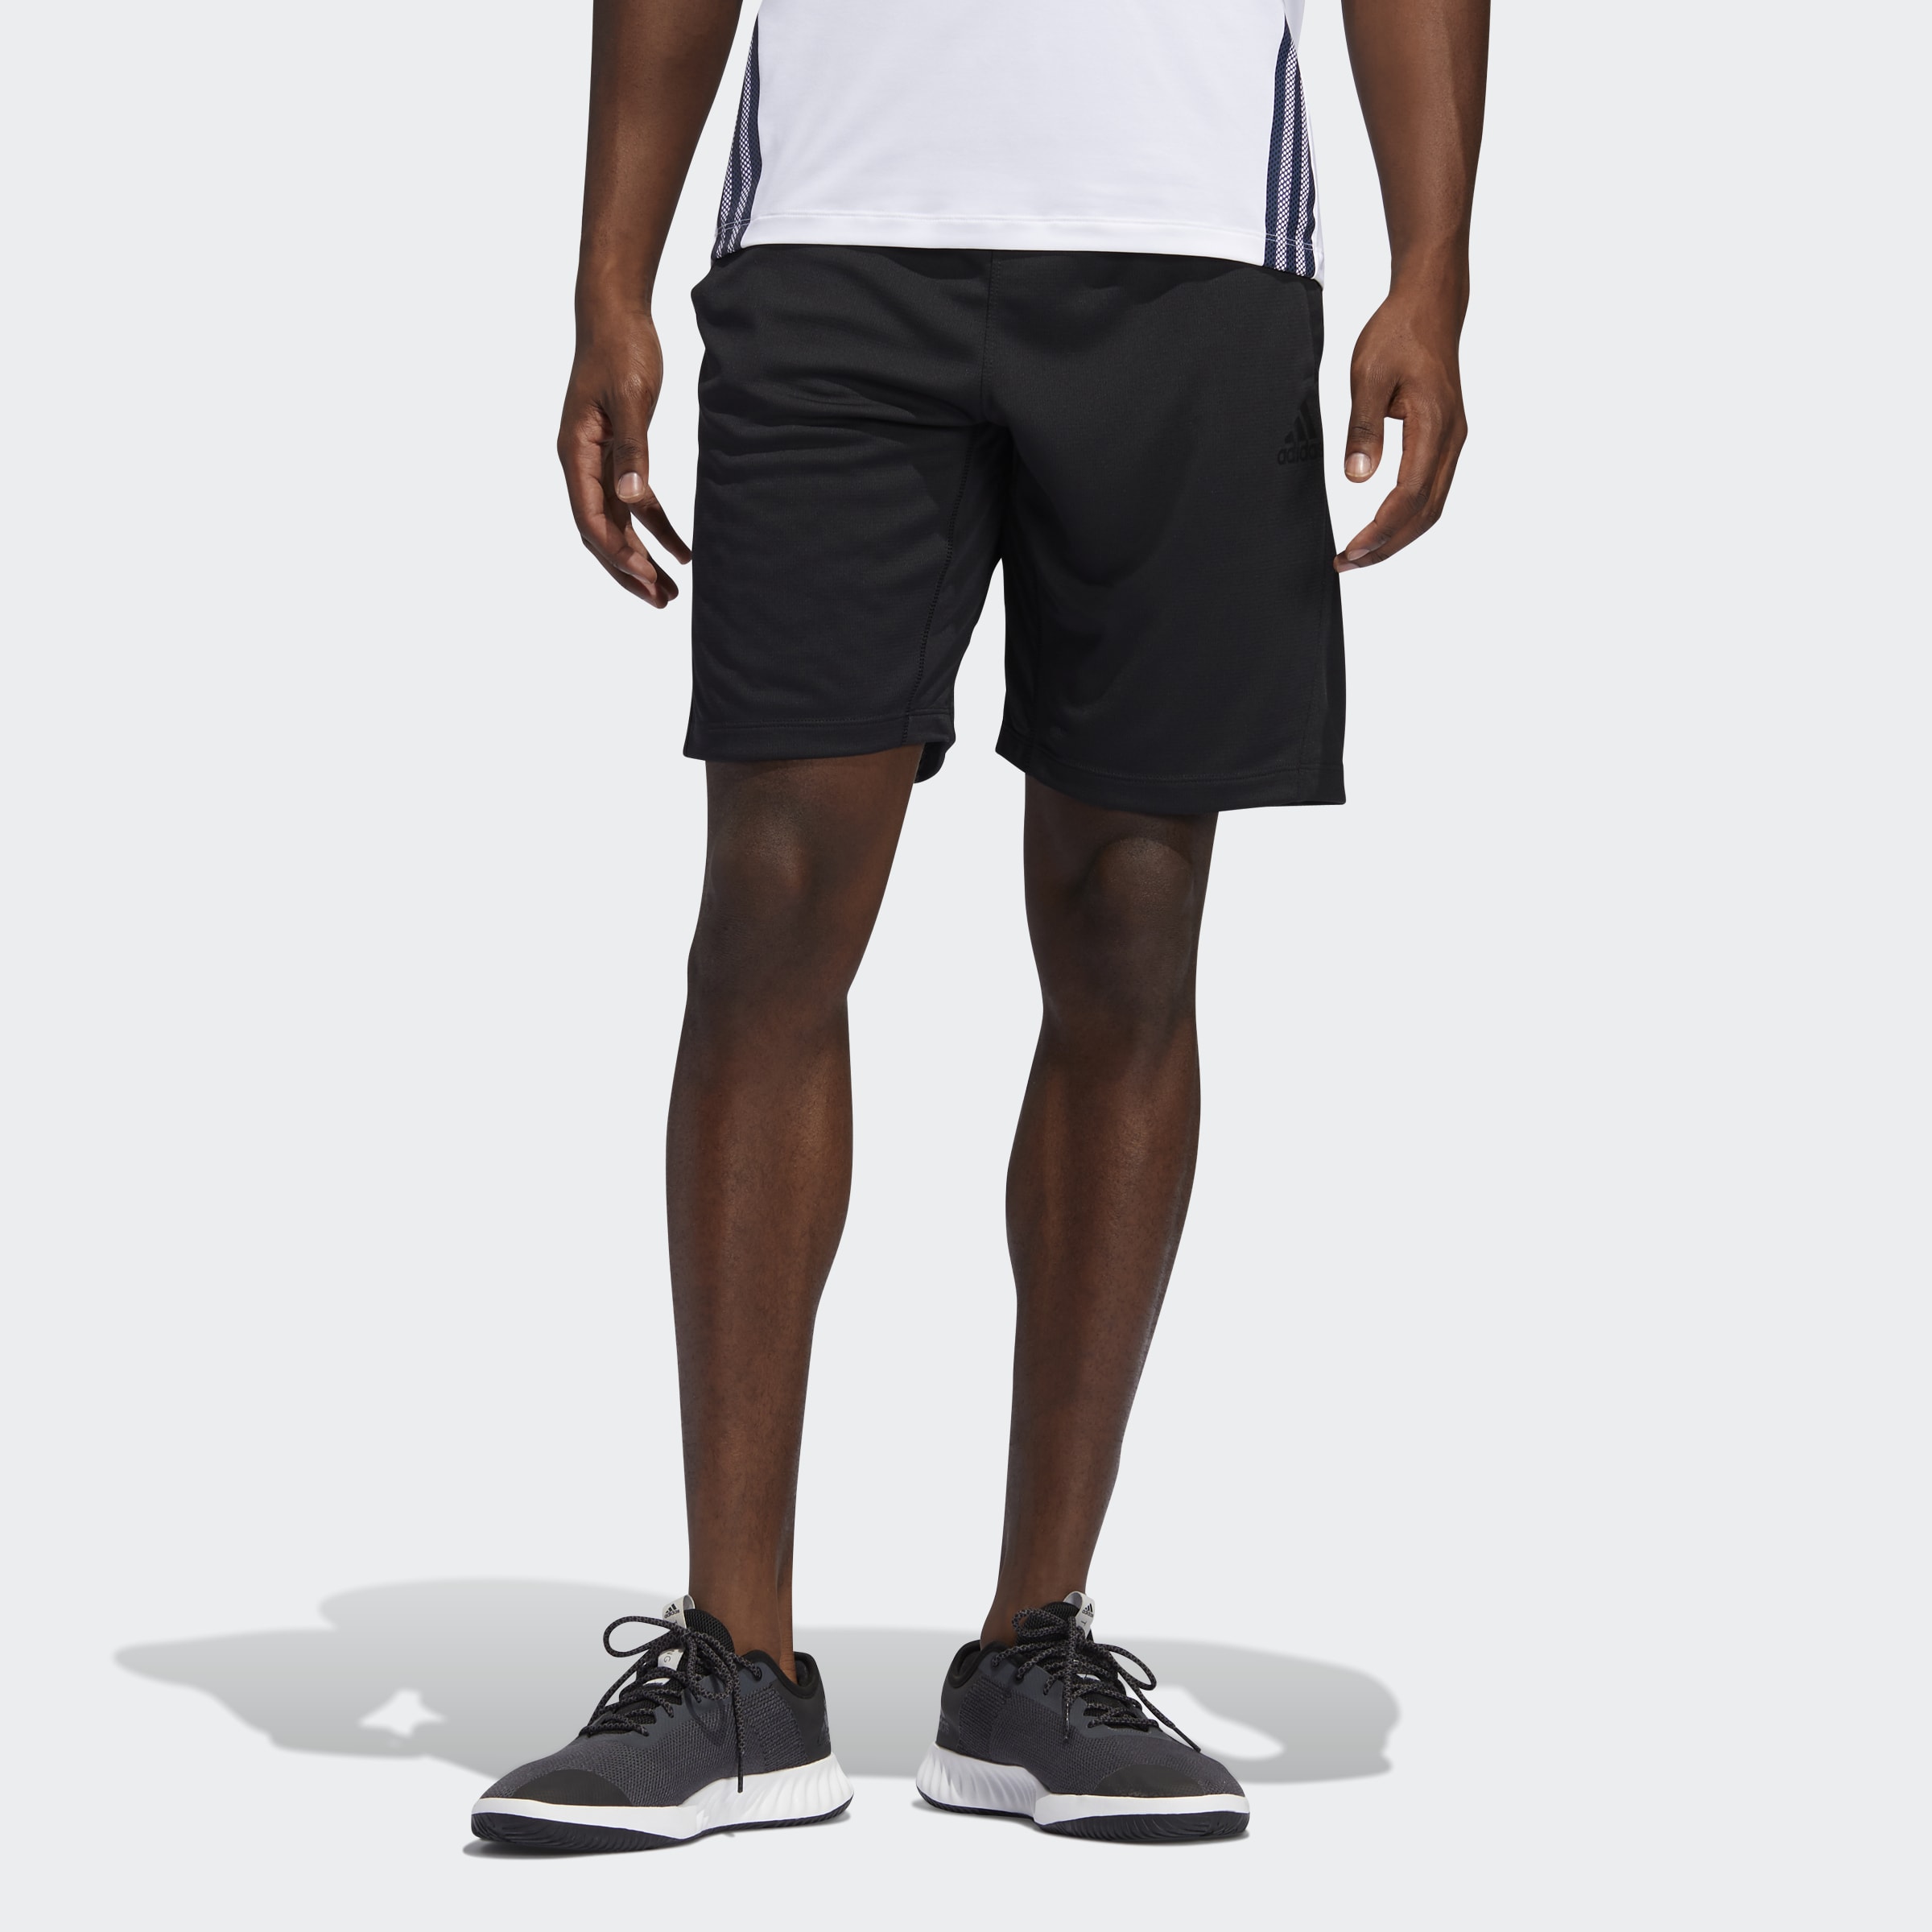 adidas 3 Stripes 9inch Shorts - Black - Mens Clothing